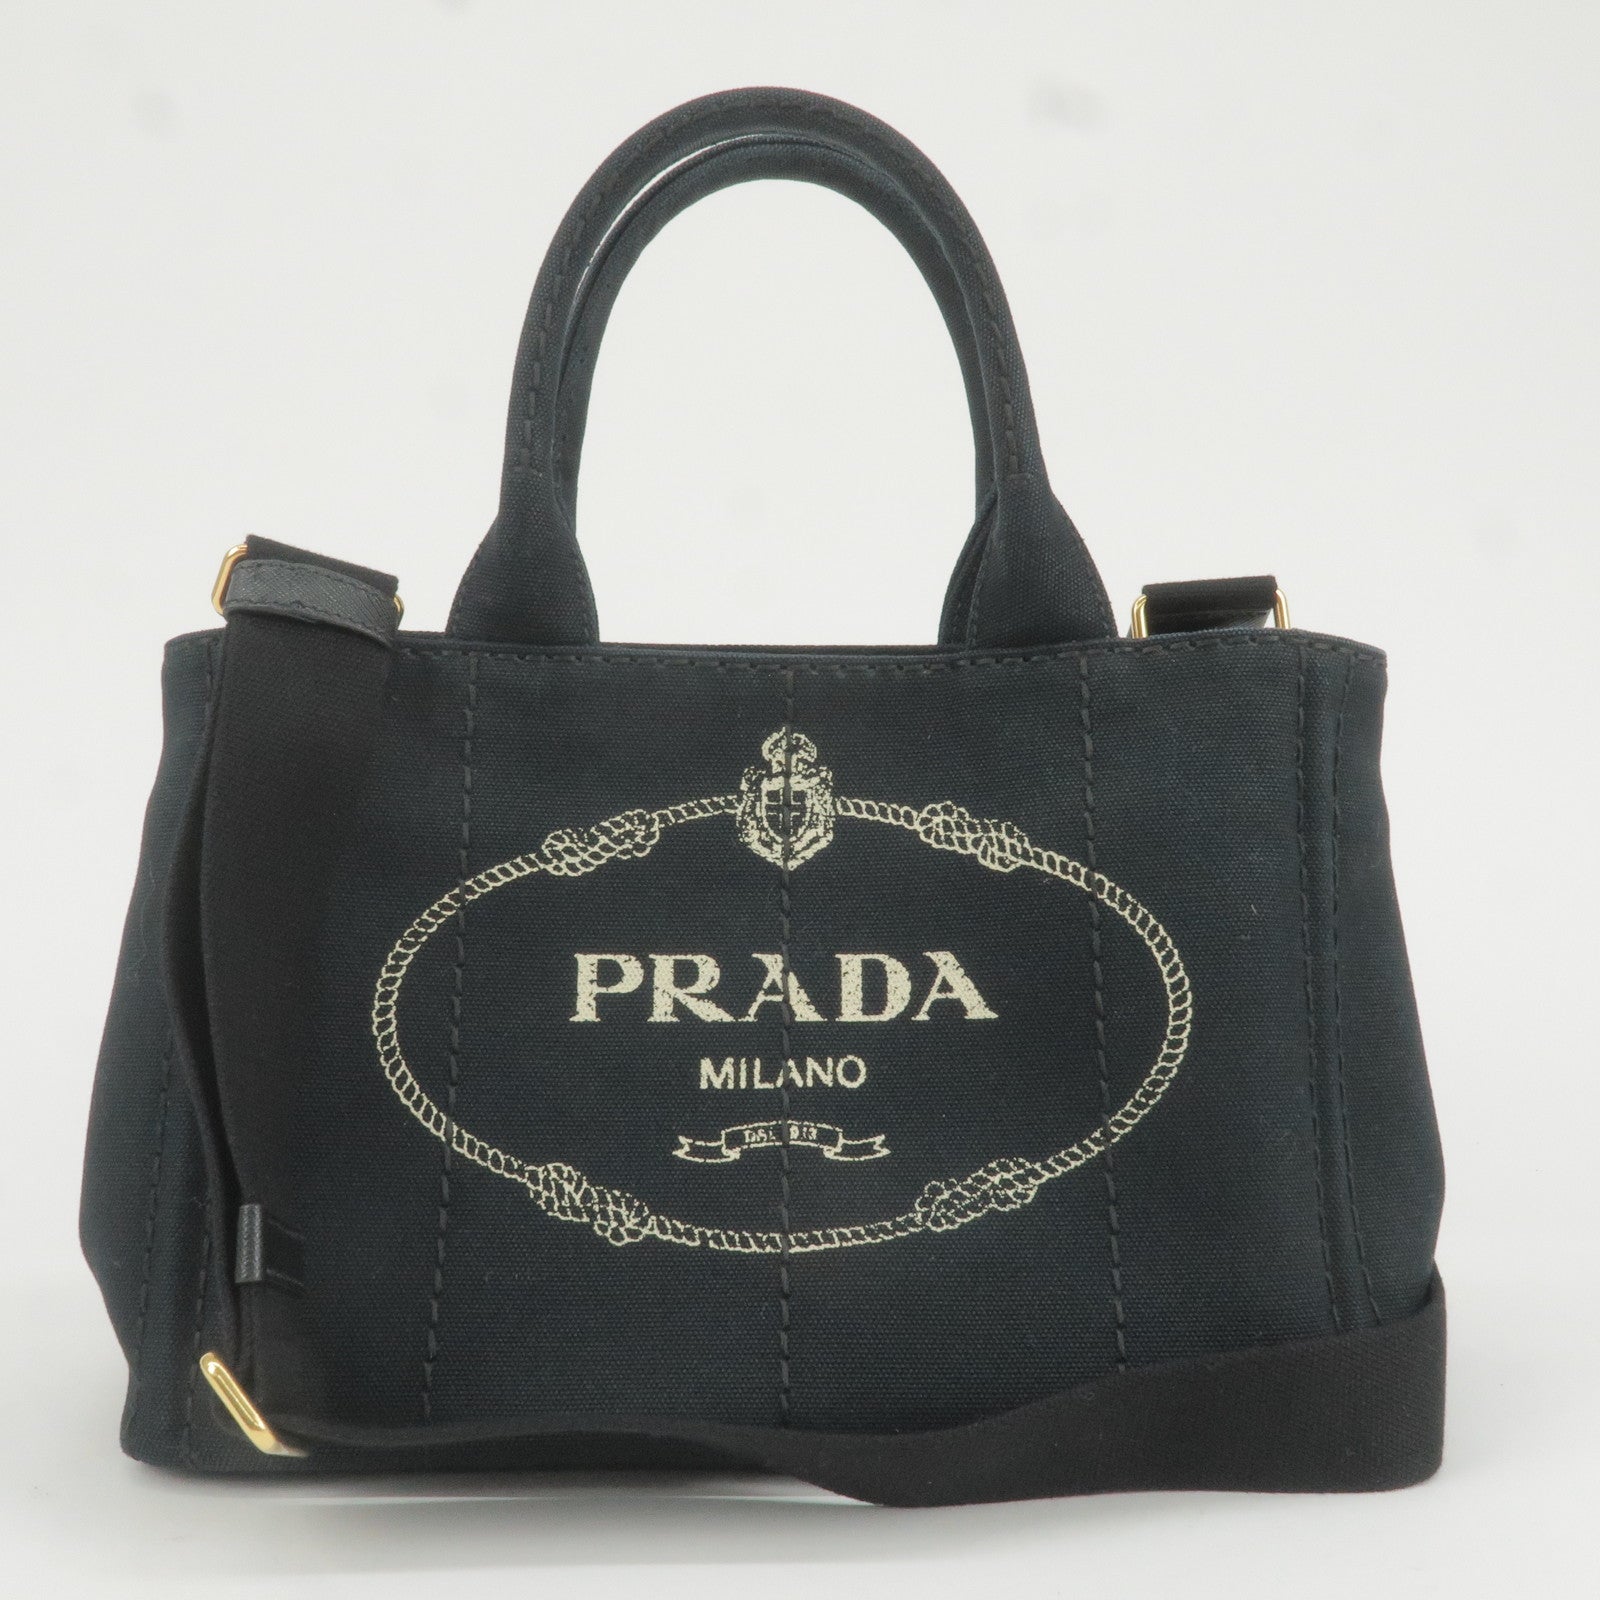 Prada Logo Tote Canapa Small Size Pink Colour Shoulder Handbag.